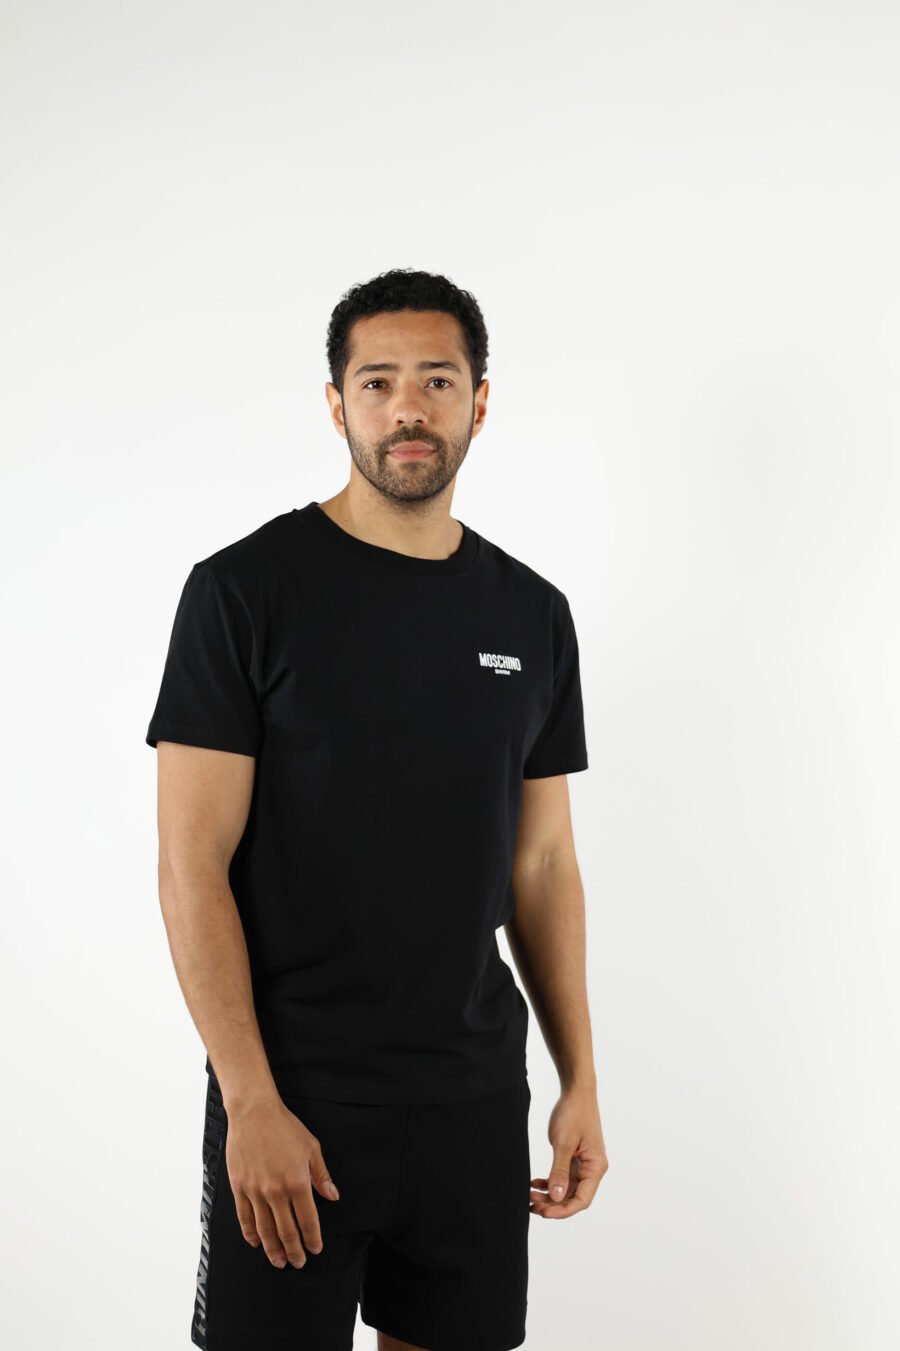 Camiseta negra con minilogo "swim" - 111054